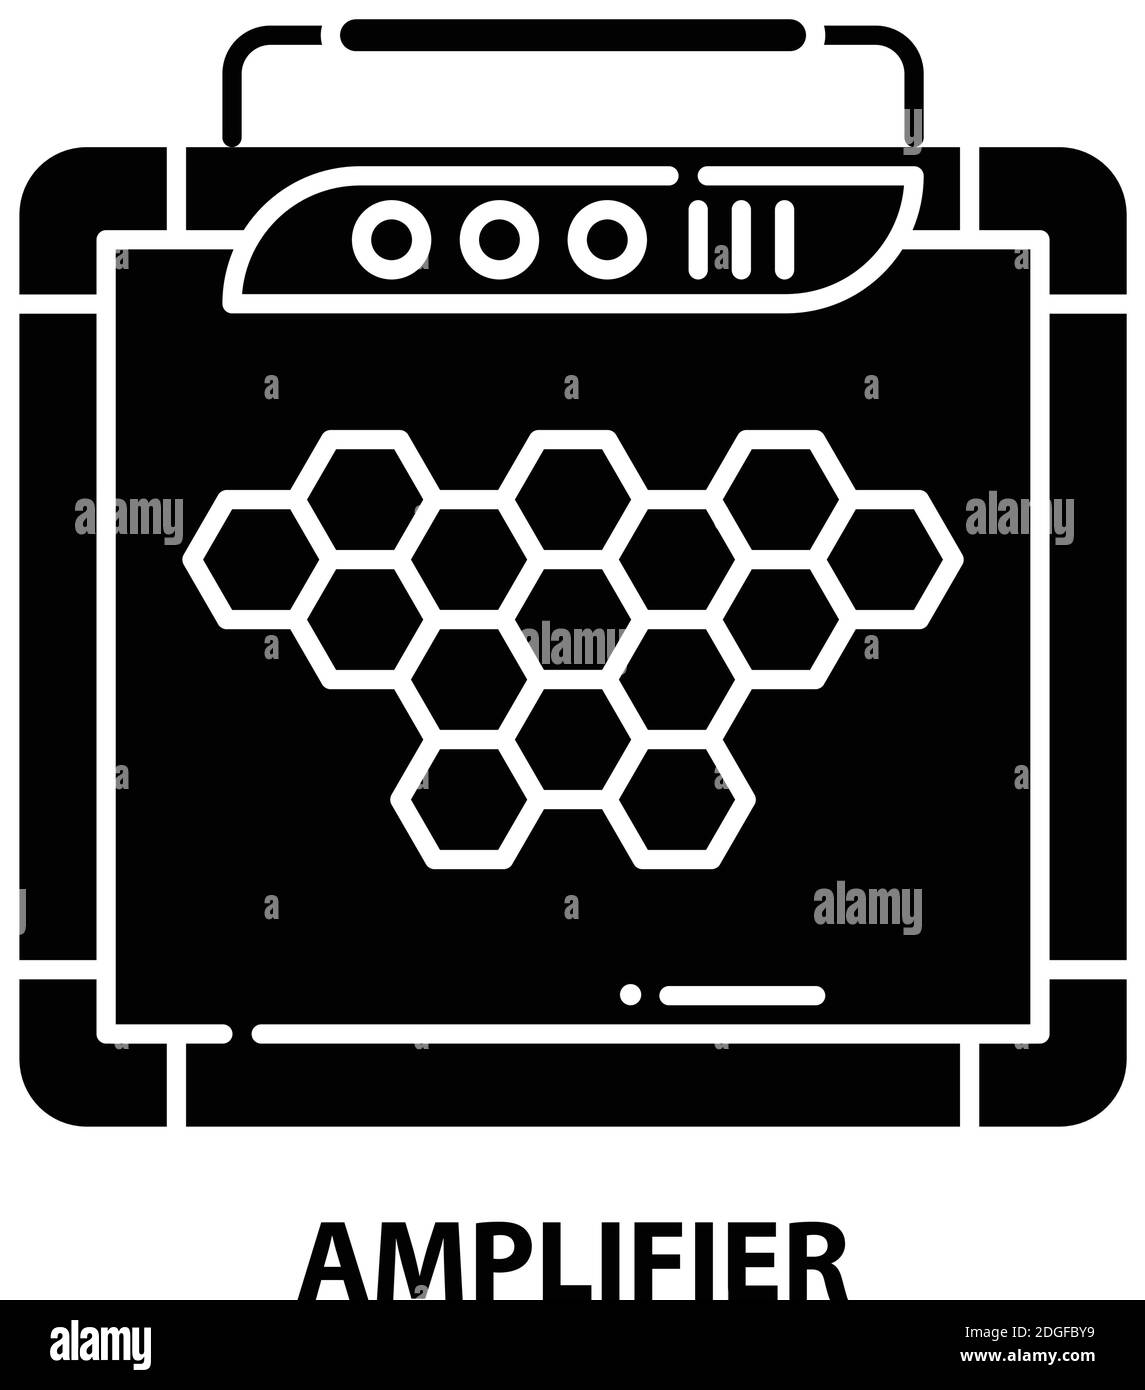 amplifier icon, black vector sign with editable strokes, concept illustration Stock Vector